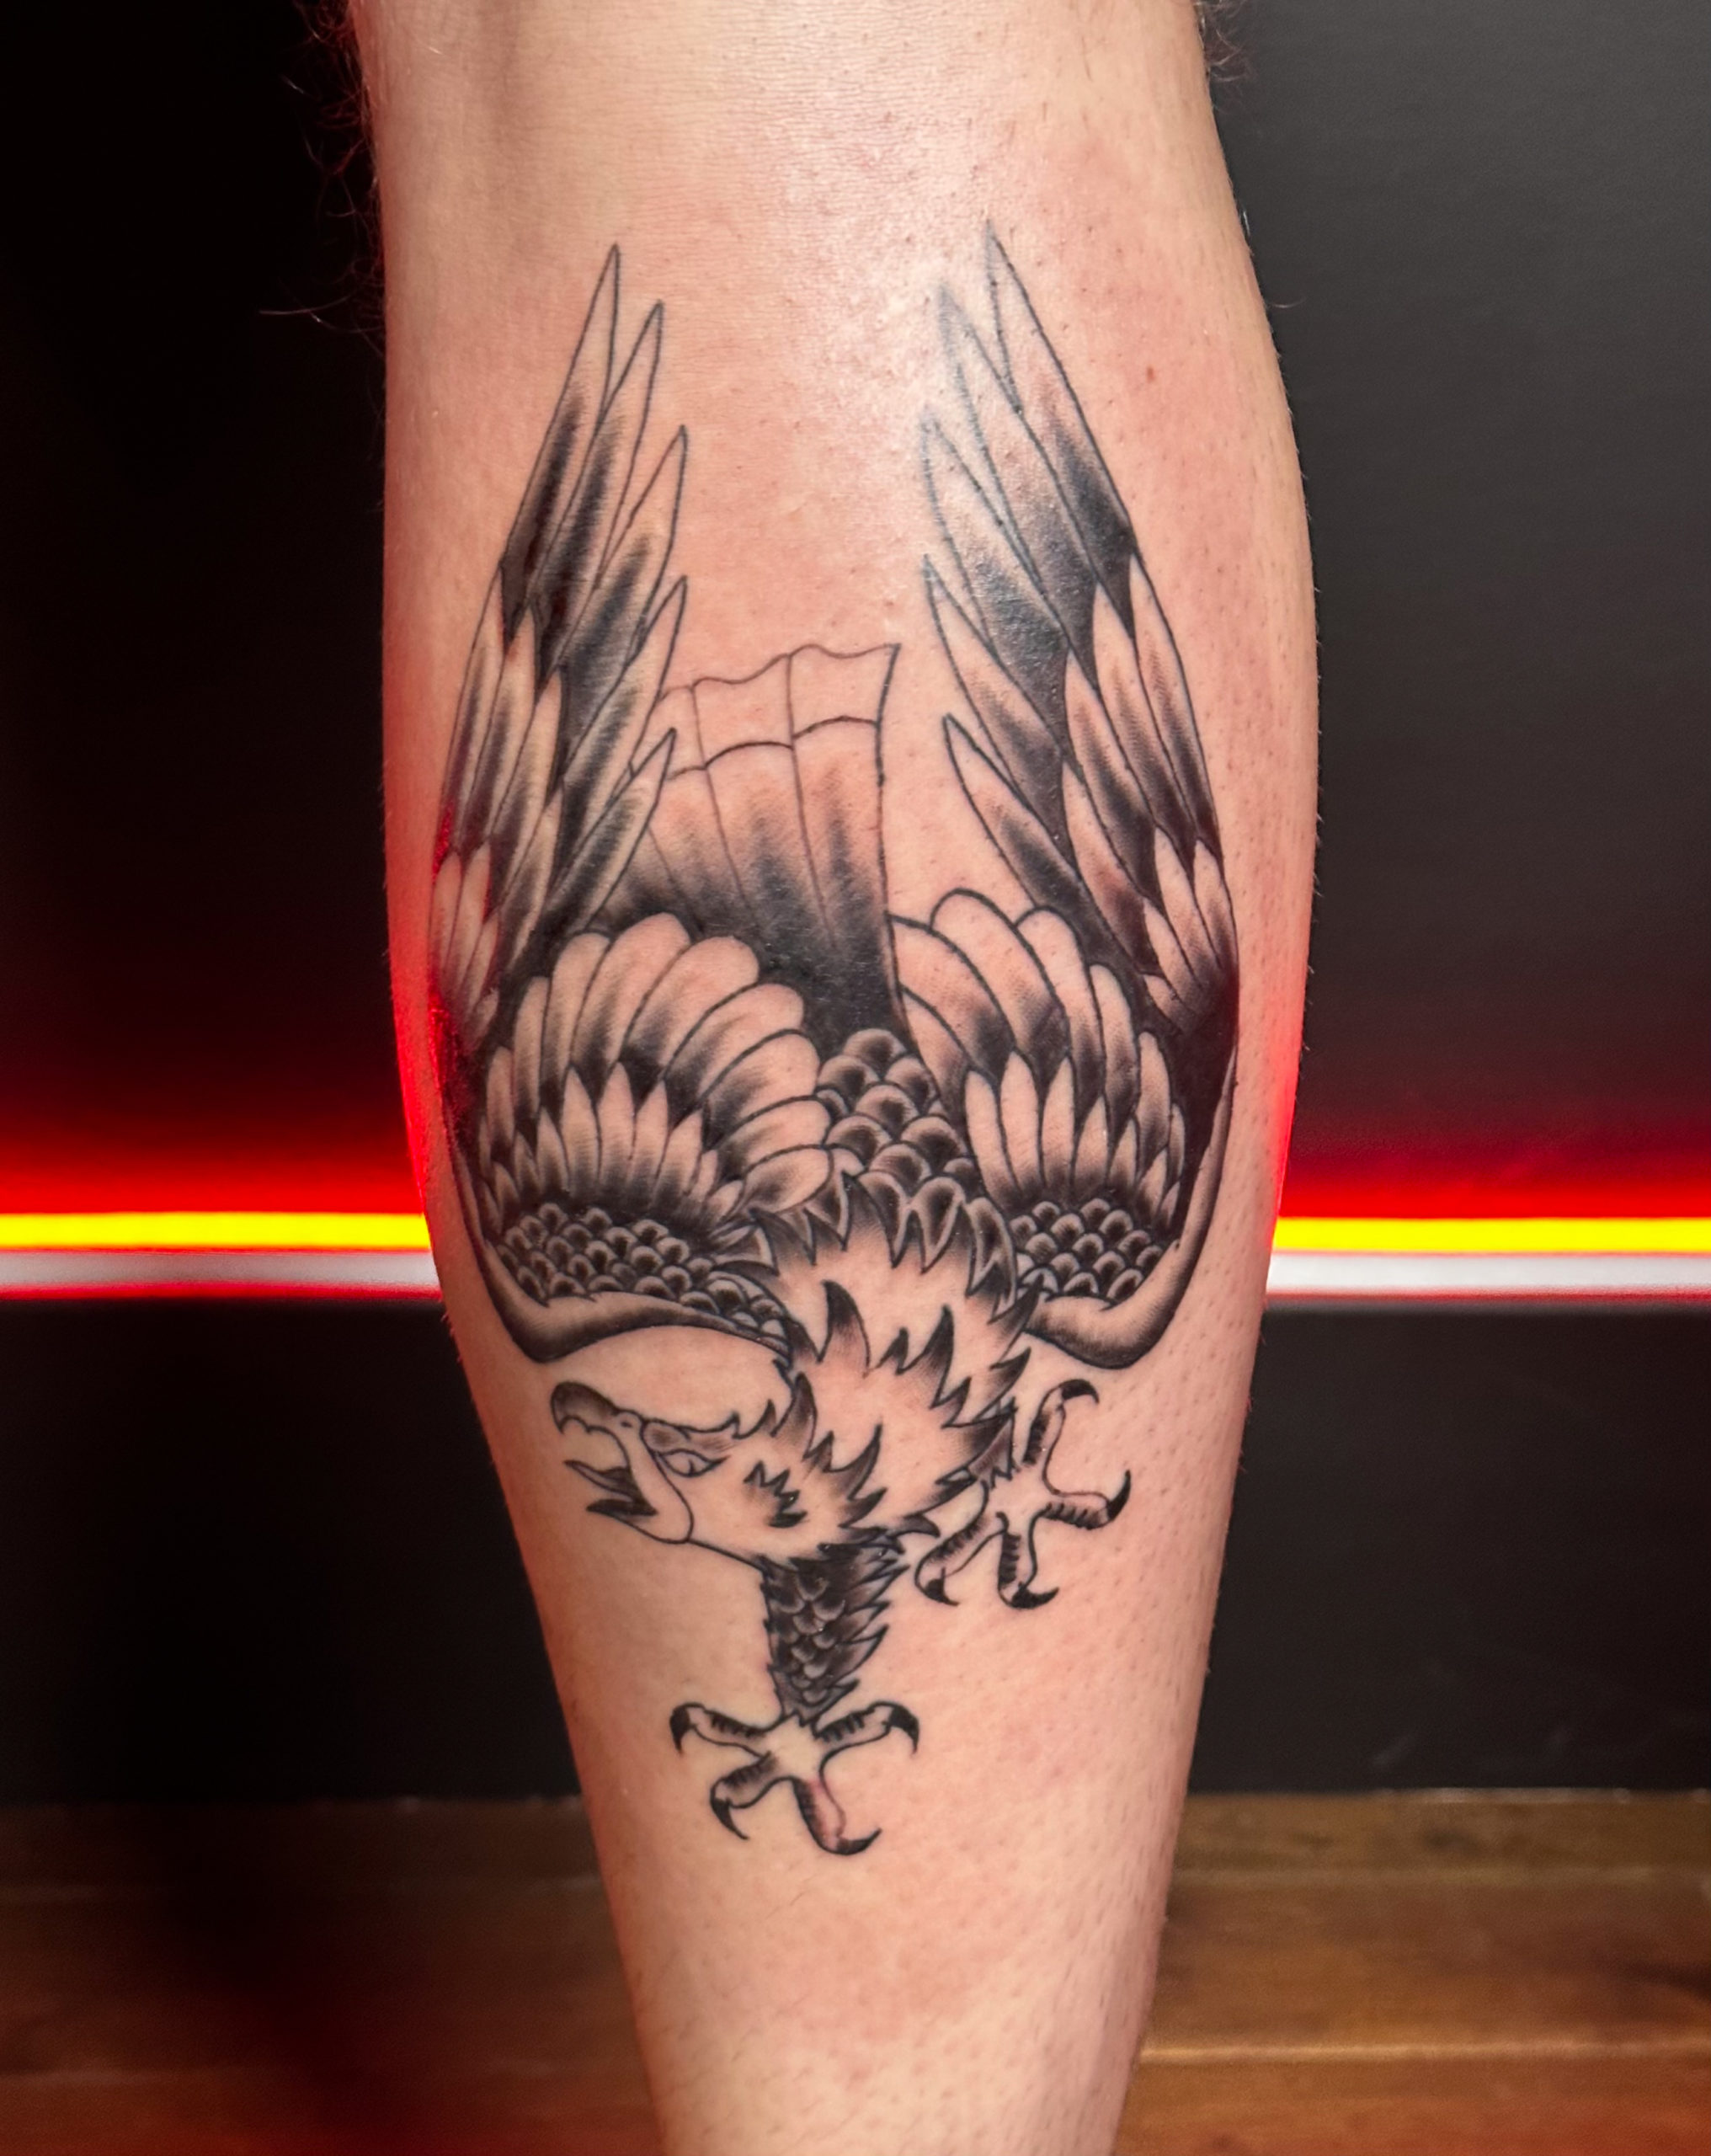 Pic of a traditional eagle leg tattoo.